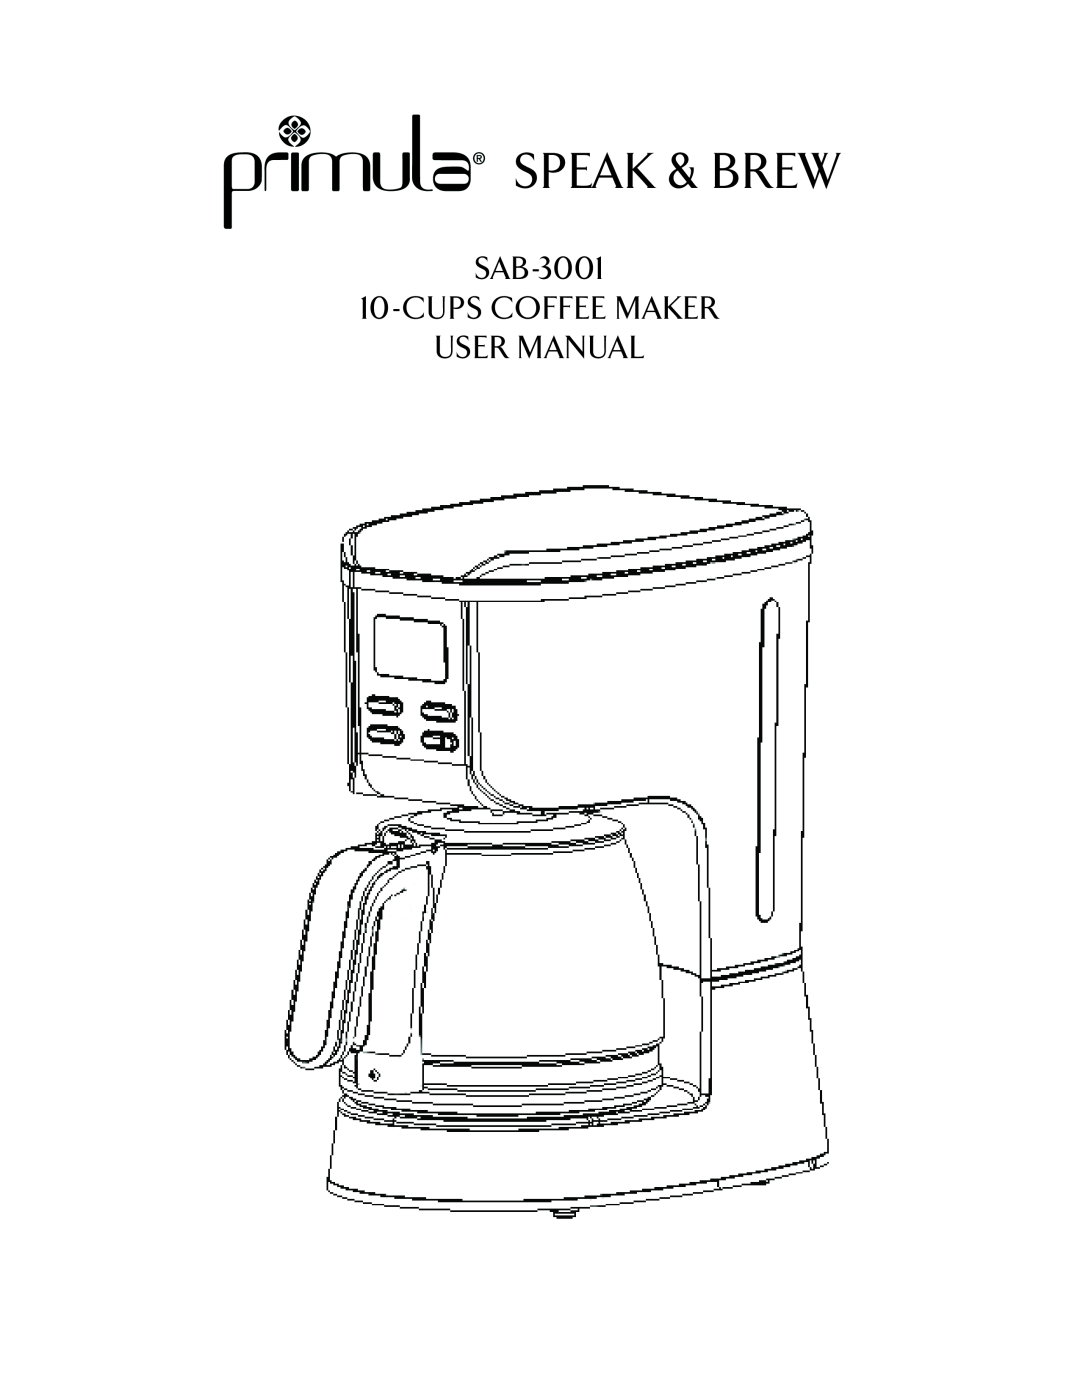 Epoca SAB-3001 user manual Speak & Brew 